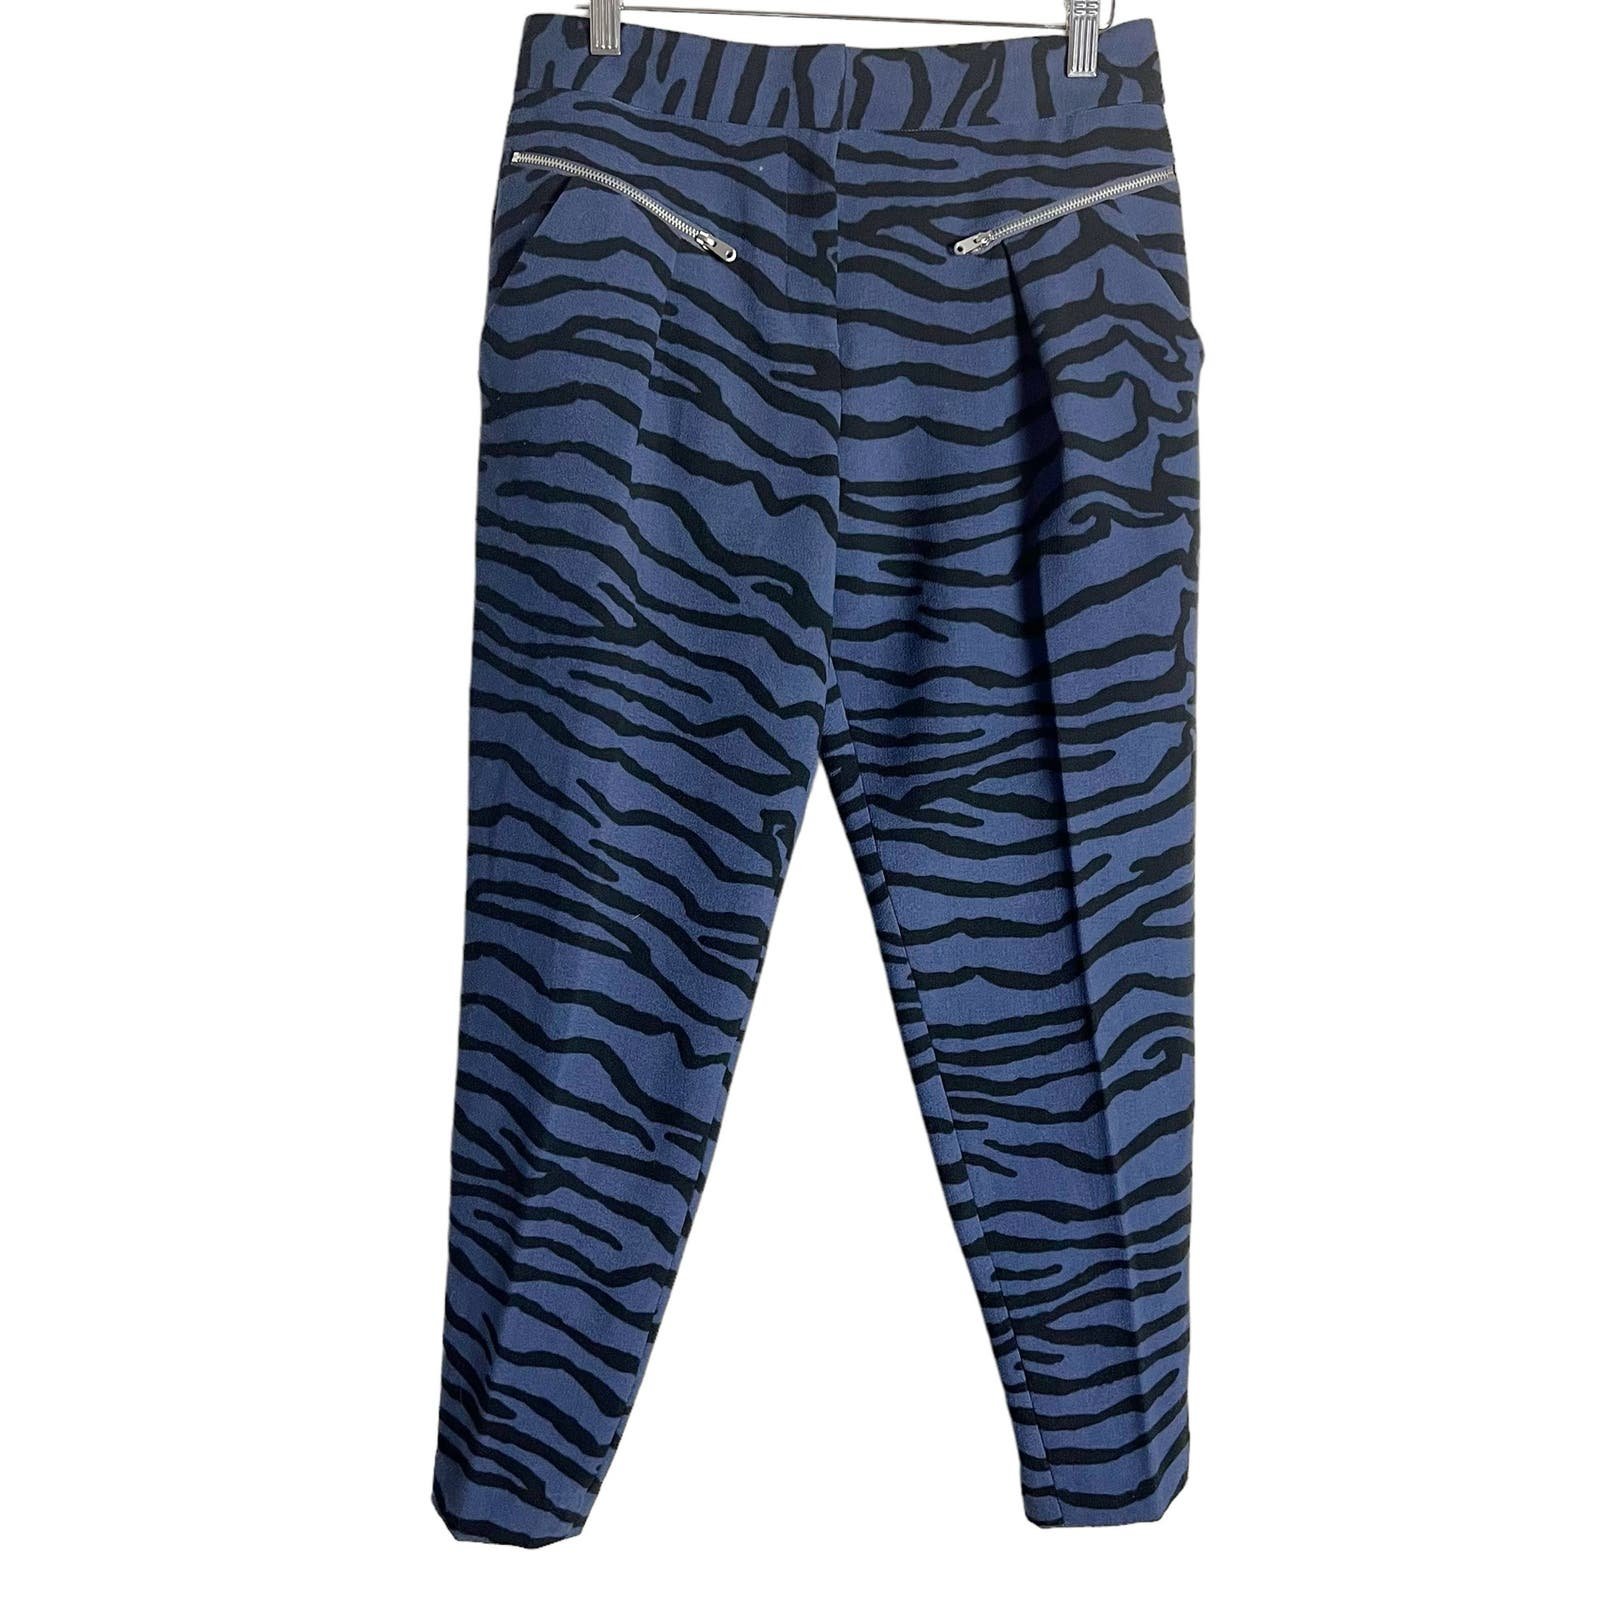 Simple Rebecca Taylor Zebra Tiger Animal Print Blue Tapered Leg Pants 2 OaK1E97YK just buy it